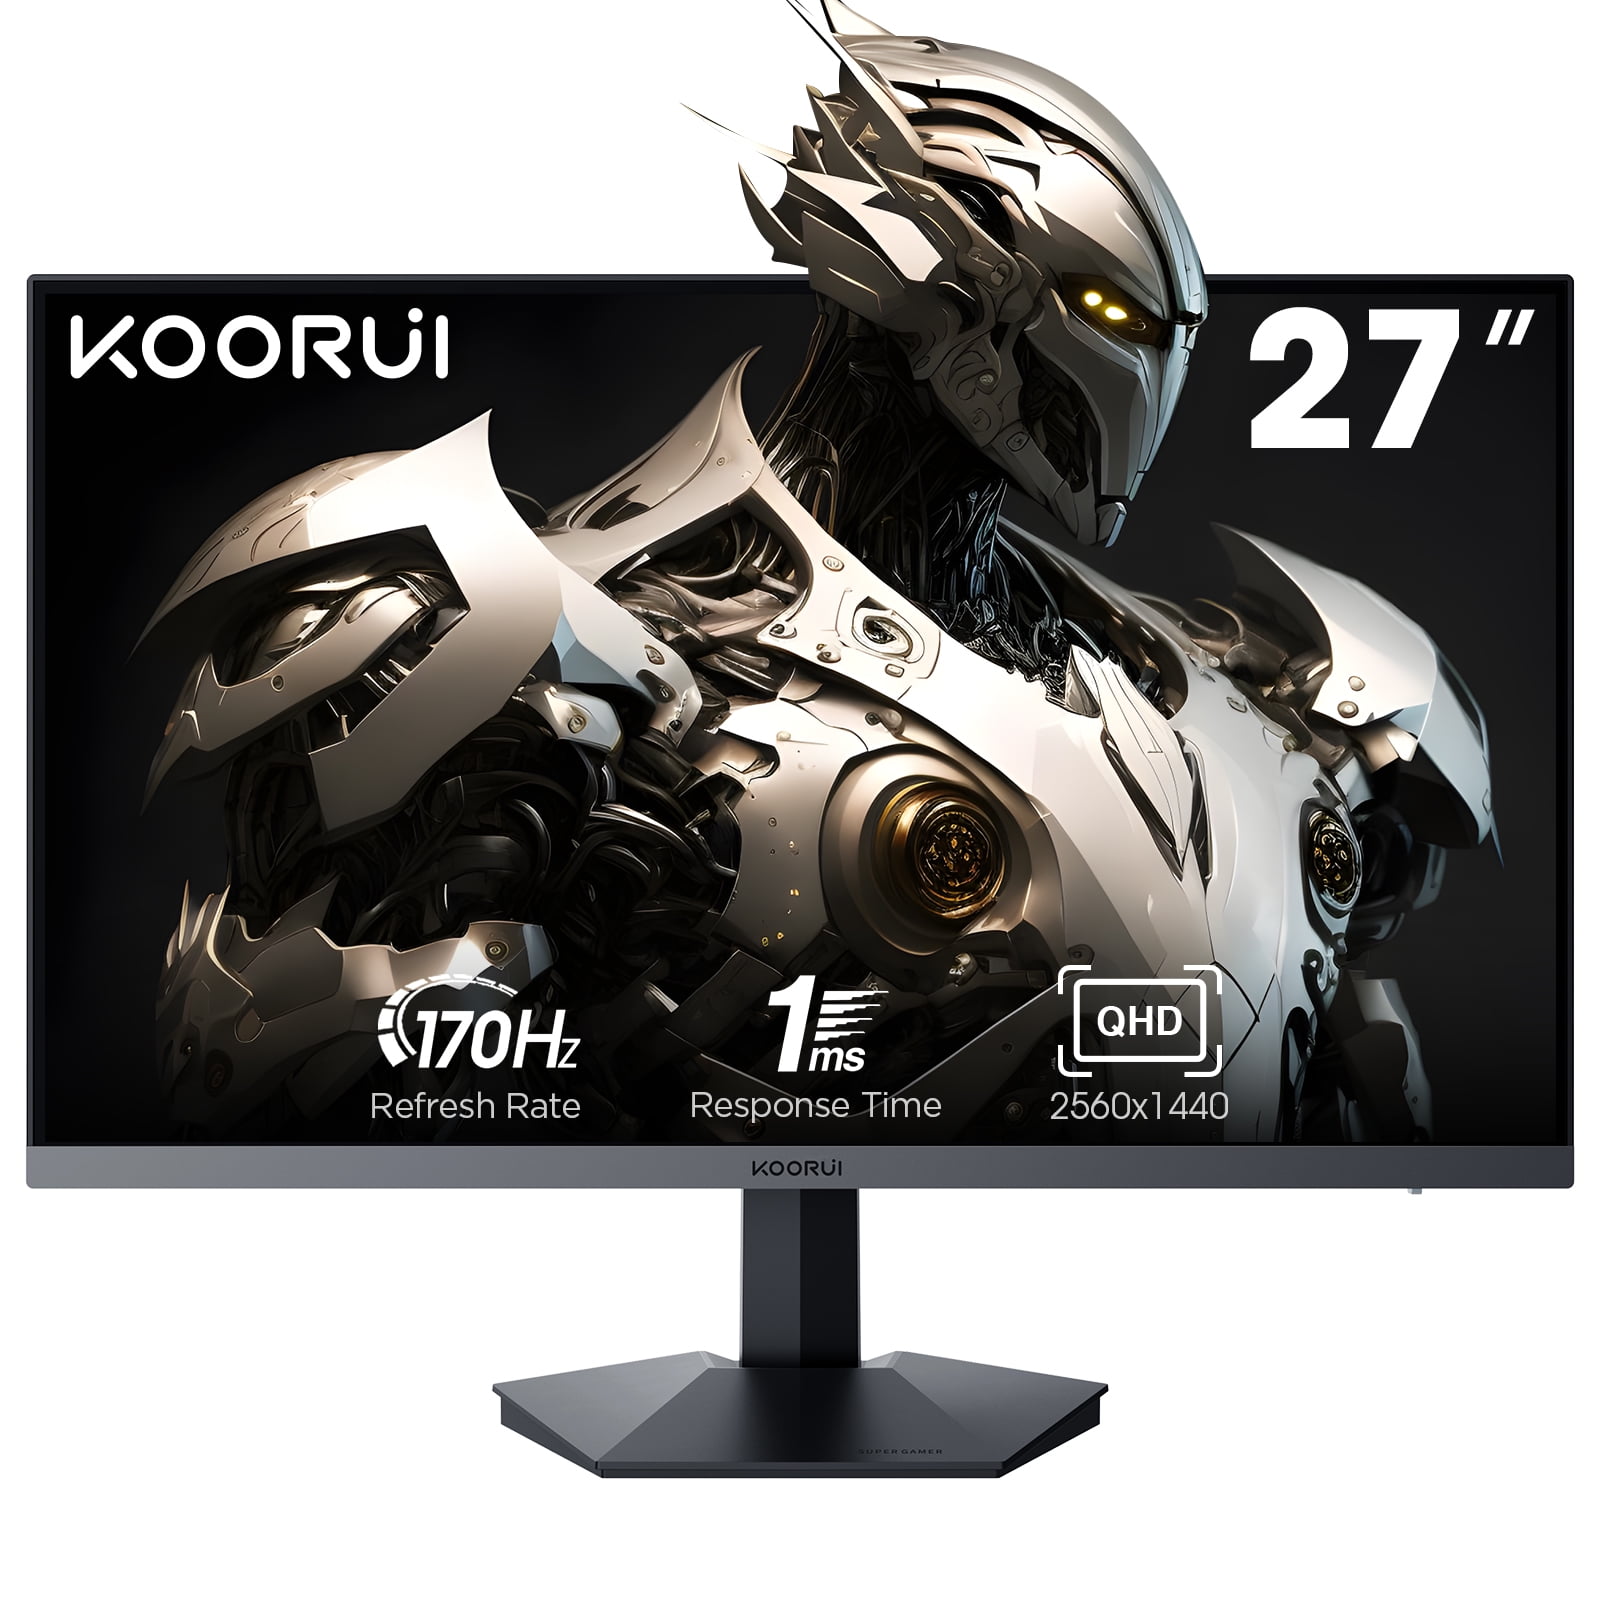 This New 2K Gaming Monitor is TOO GOOD - KOORUI 27 1440p 144hz 1ms 